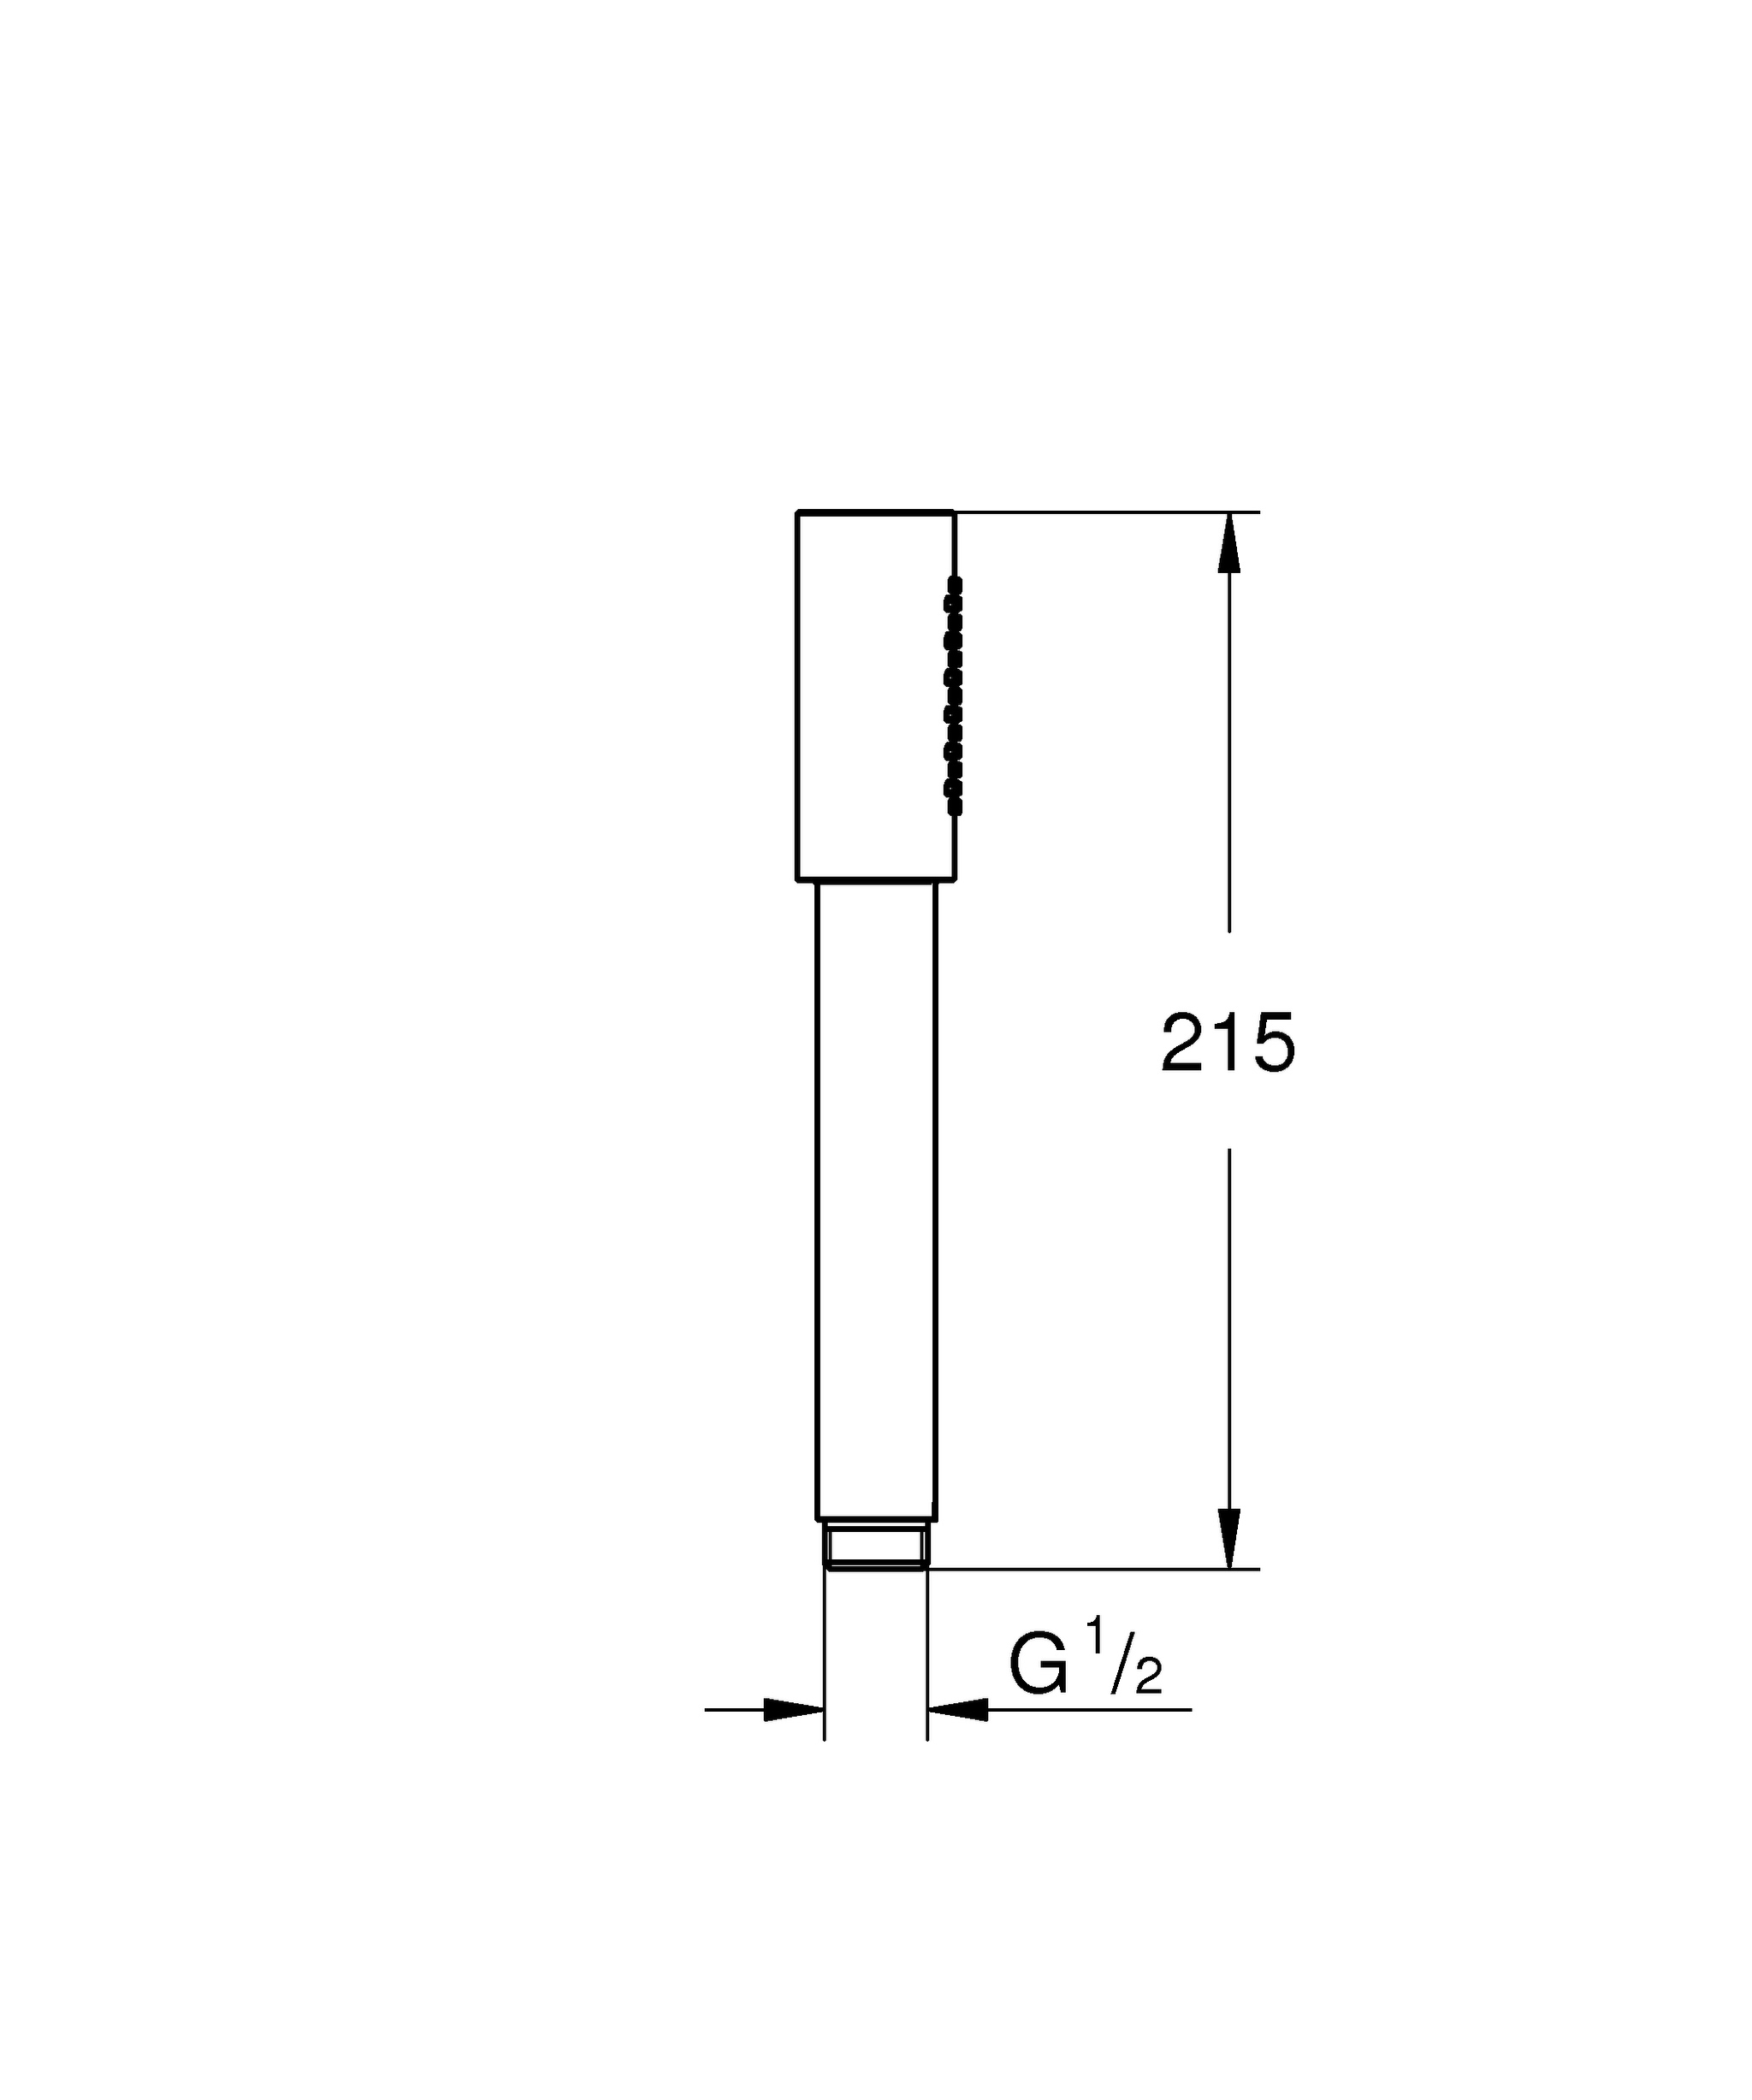 Handbrause Rainshower Aqua Stick 28341, 1 Strahlart, 9,5 l/min Durchflusskonstanthalter, chrom